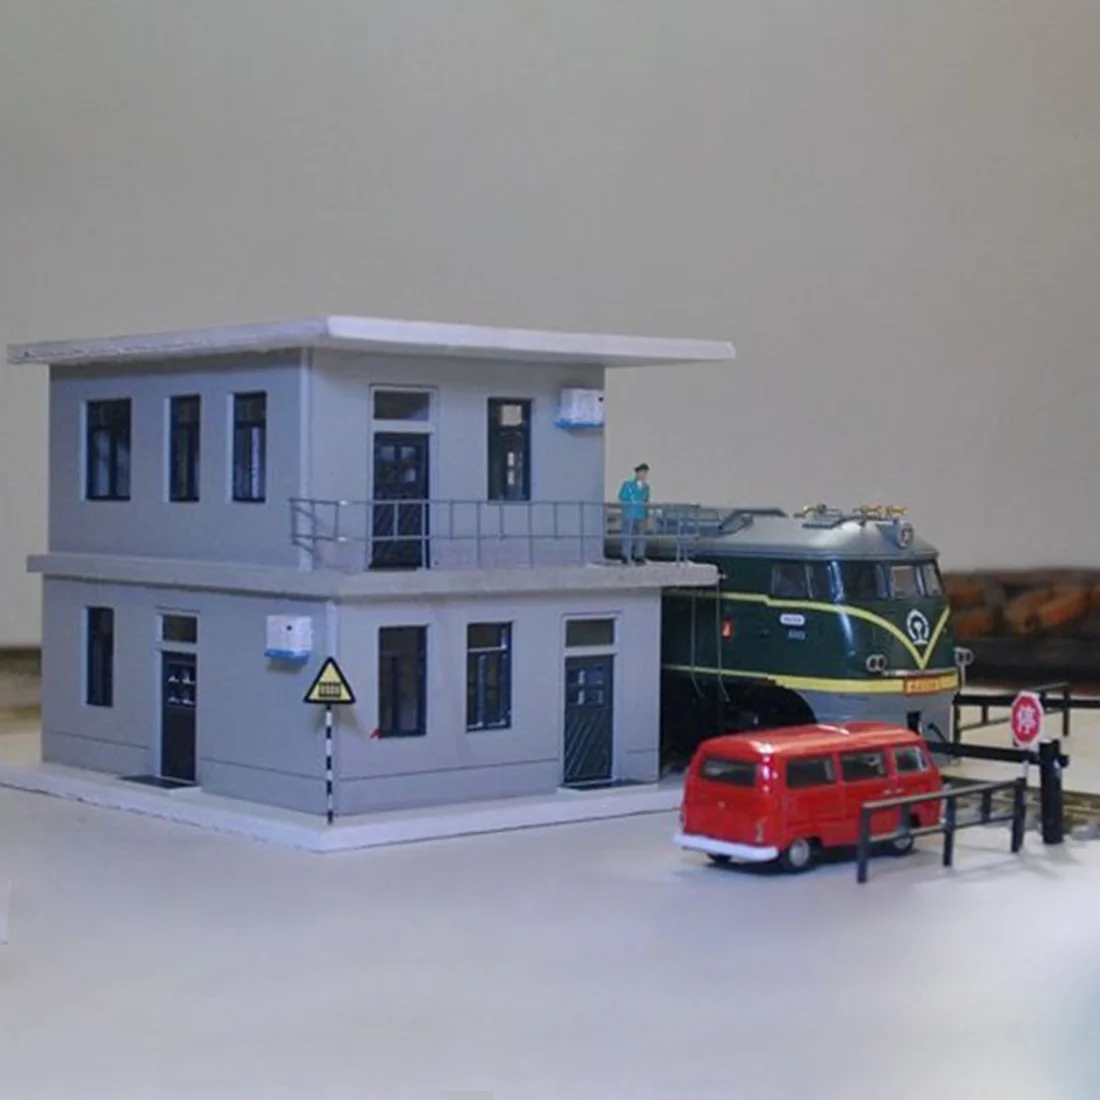 NFSTRIKE 1:87 HO Scale Two-Storey Railway House Model Train Scene Model For Sand Table Ho Scale Model Train Accessories